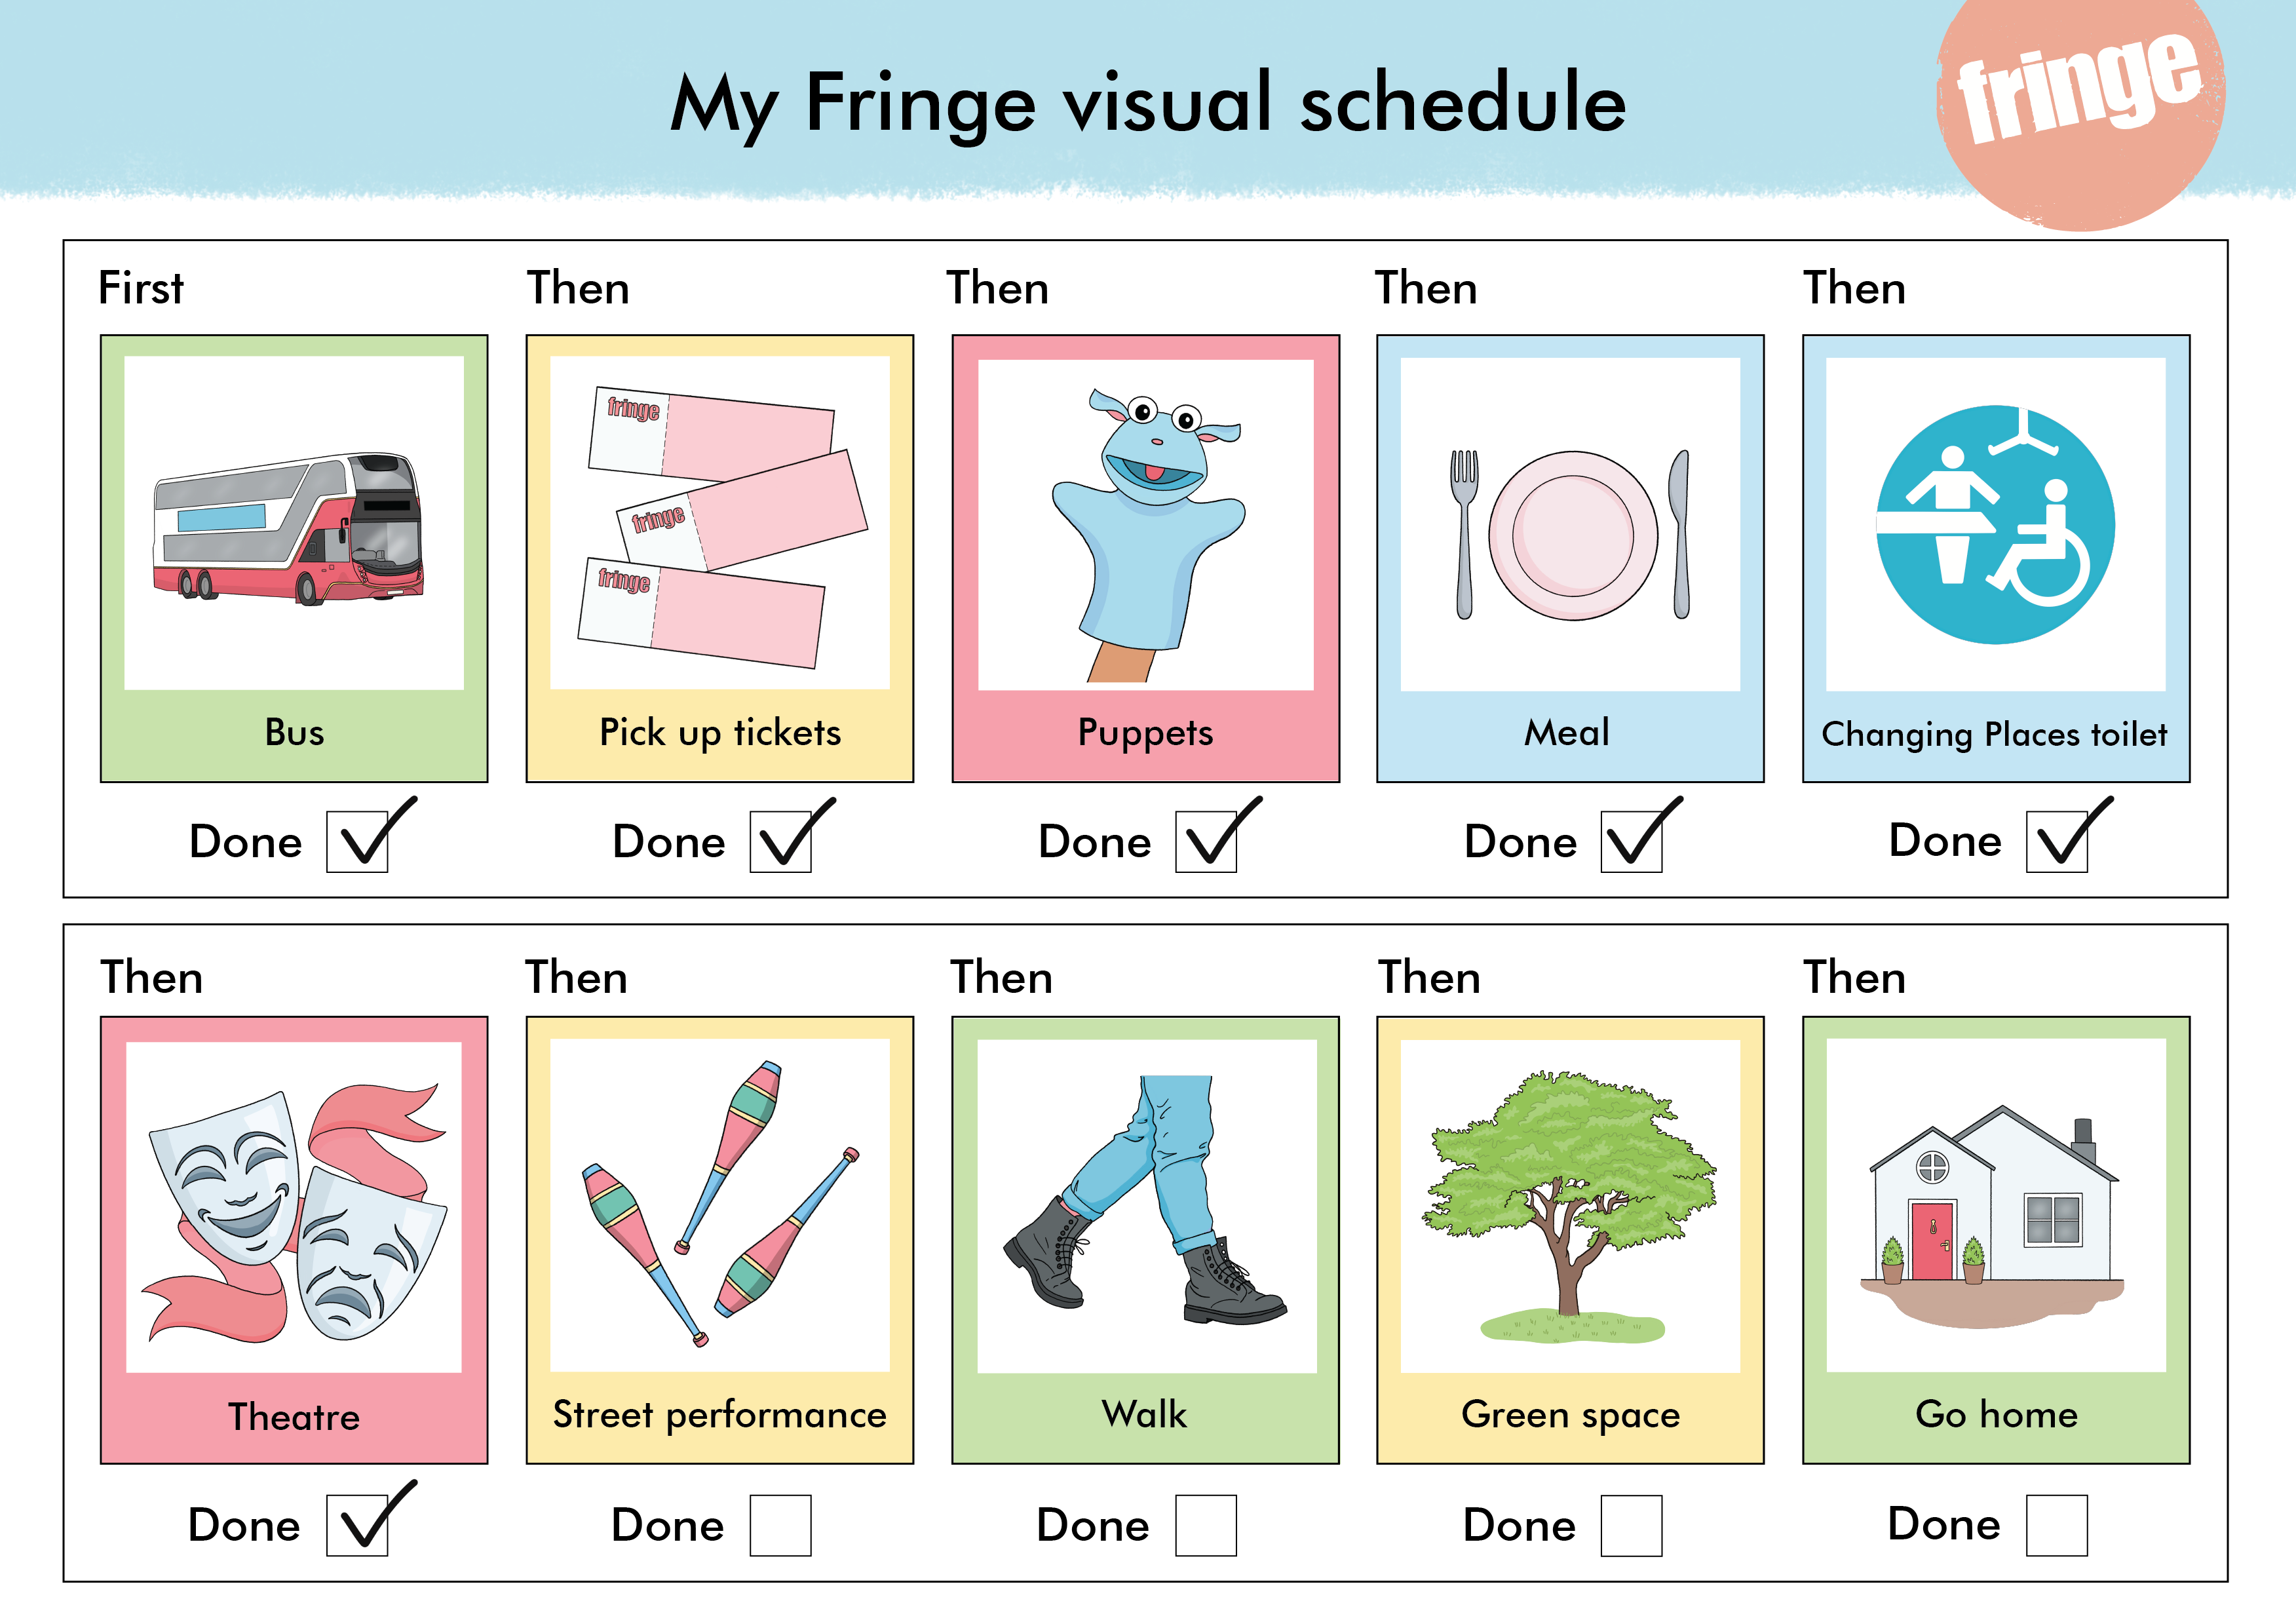  - Fringe Visual schedule - SWAN volunteer creates visual schedule for the Edinburgh Fringe